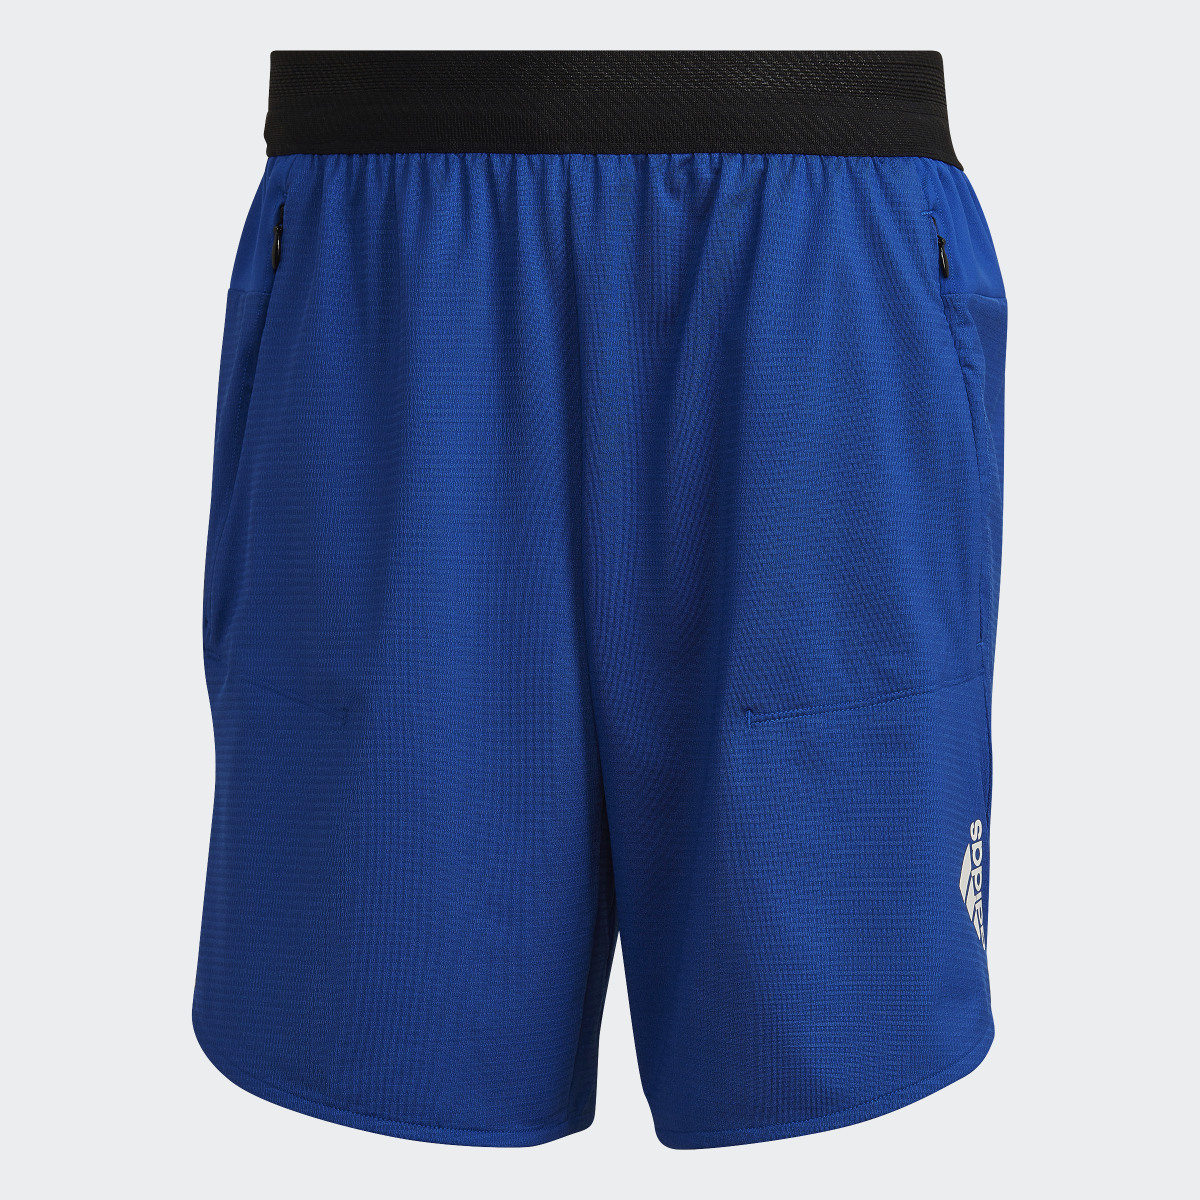 Adidas Designed for Training HEAT.RDY HIIT Shorts. 4